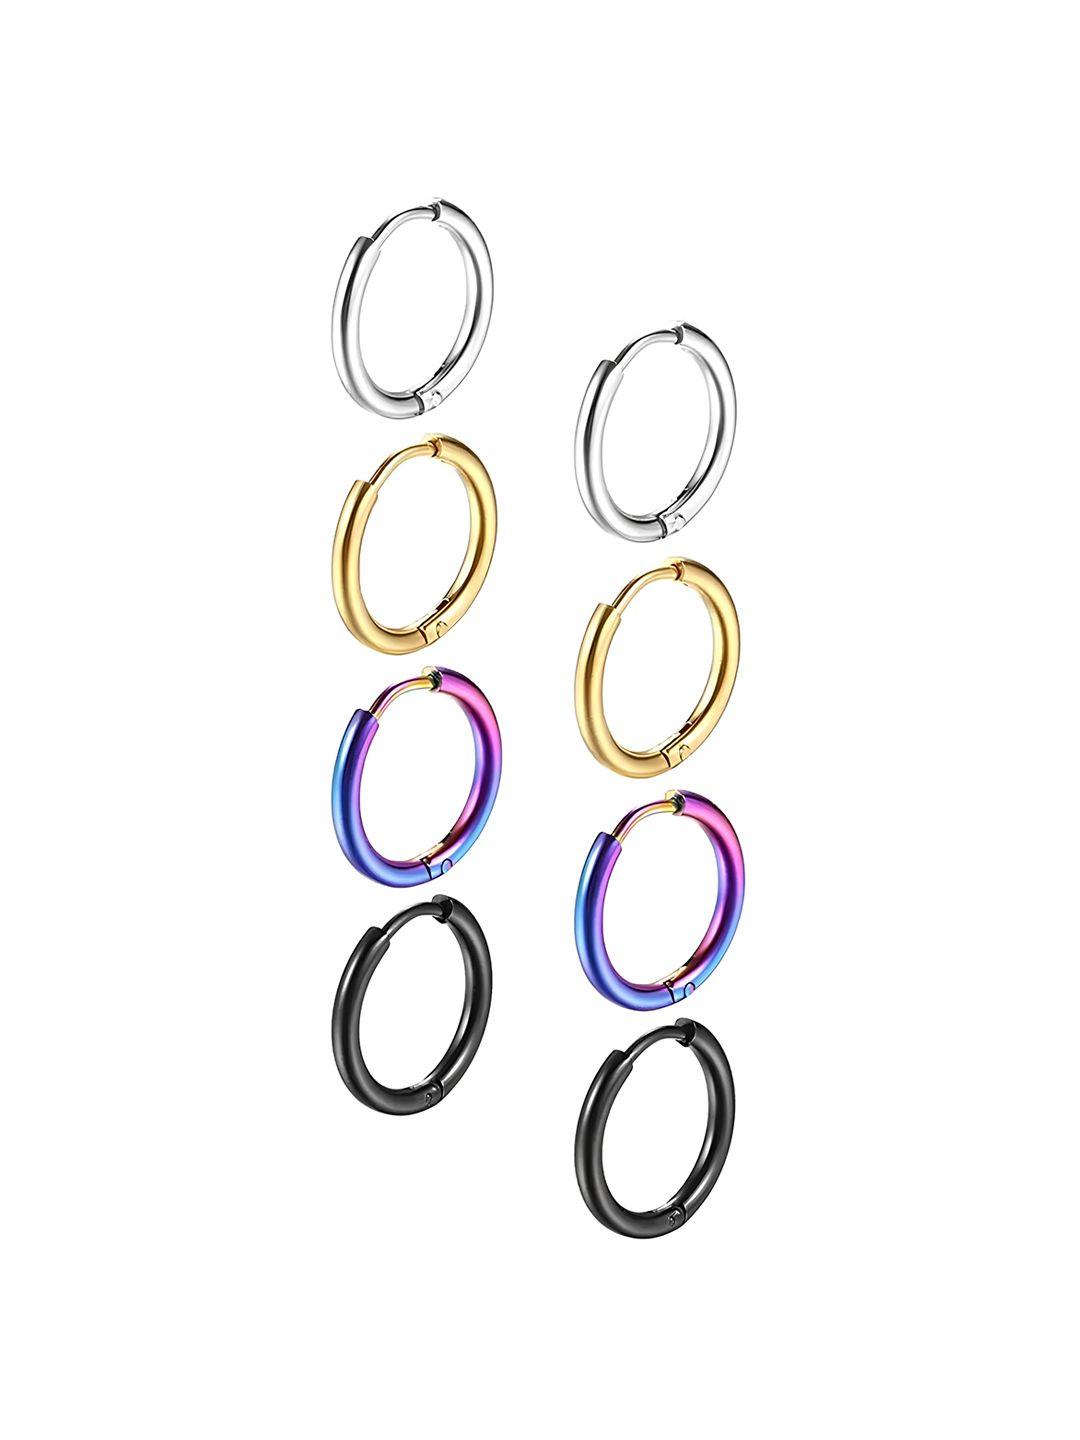 karishma kreations set of 4 contemporary hoop earrings